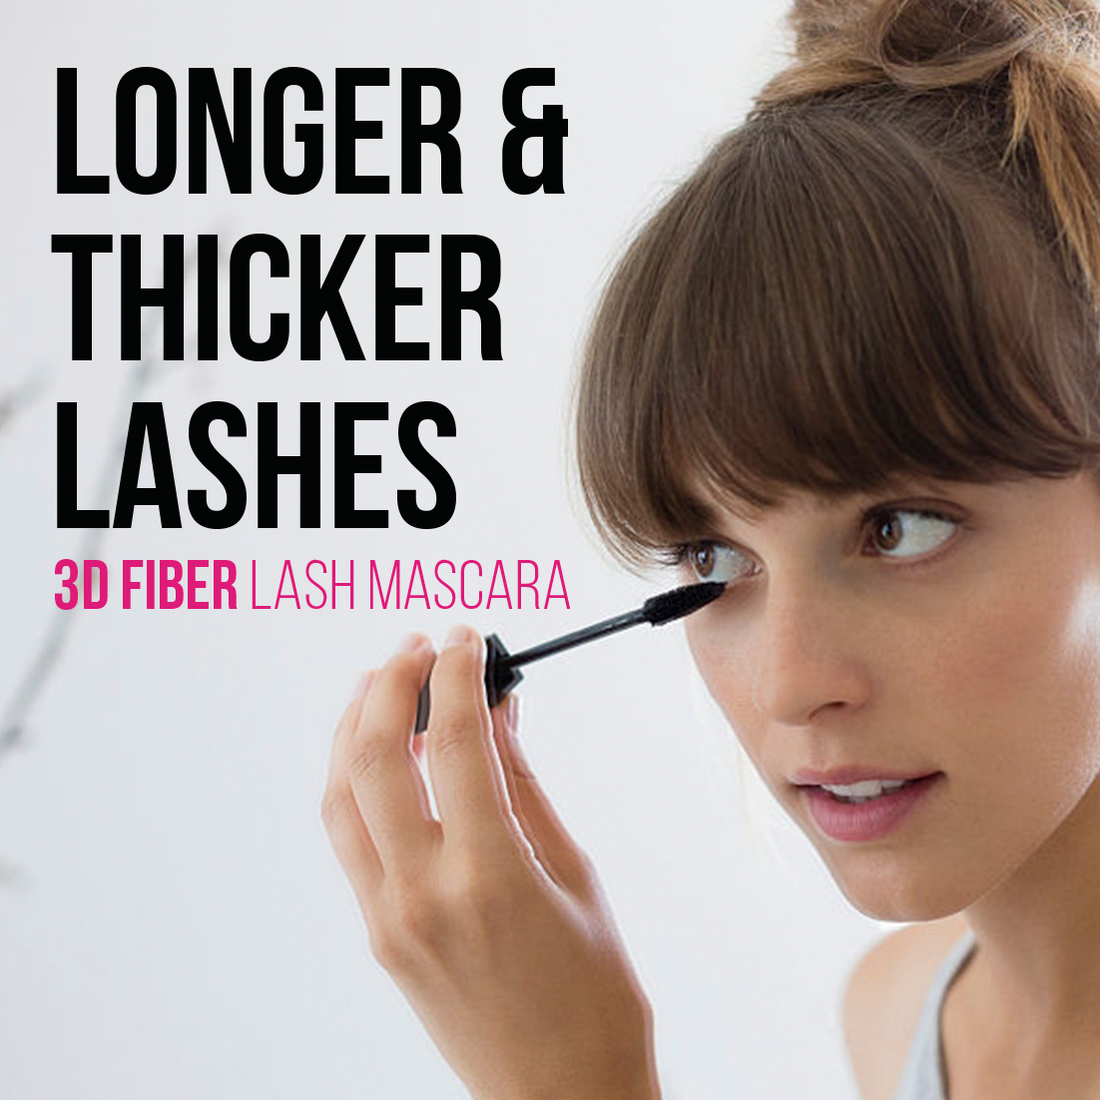 Best 3D Fiber Lash Mascara for Contact Lens Users in Virginia